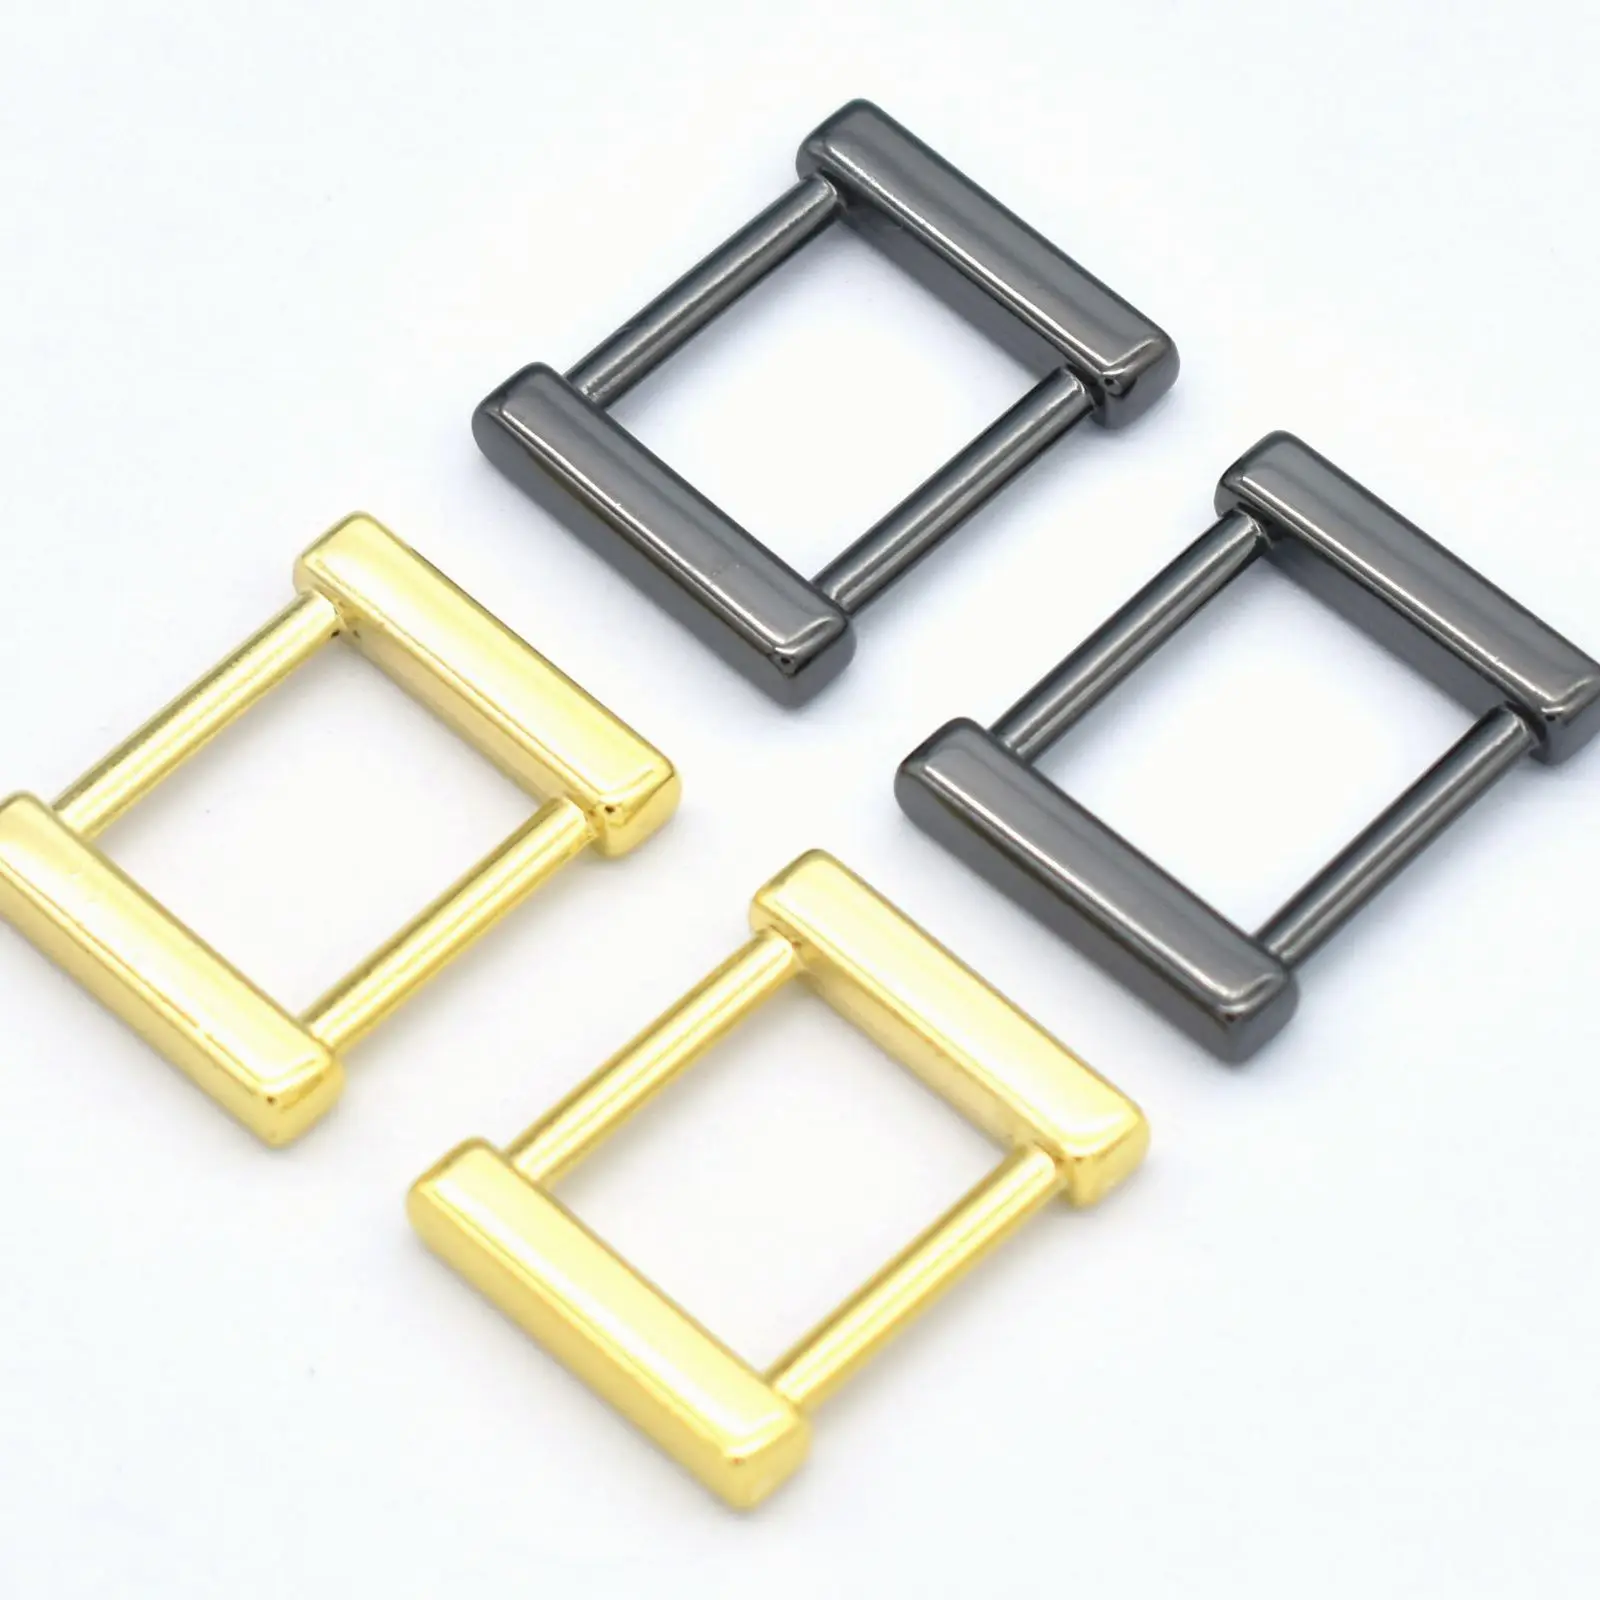 

12mm Gold Adjustable Buckle Slide Buckles Rectangle Metal Purse Handbag Making Bag strap Buckle webbing hardware Jewelry Charm